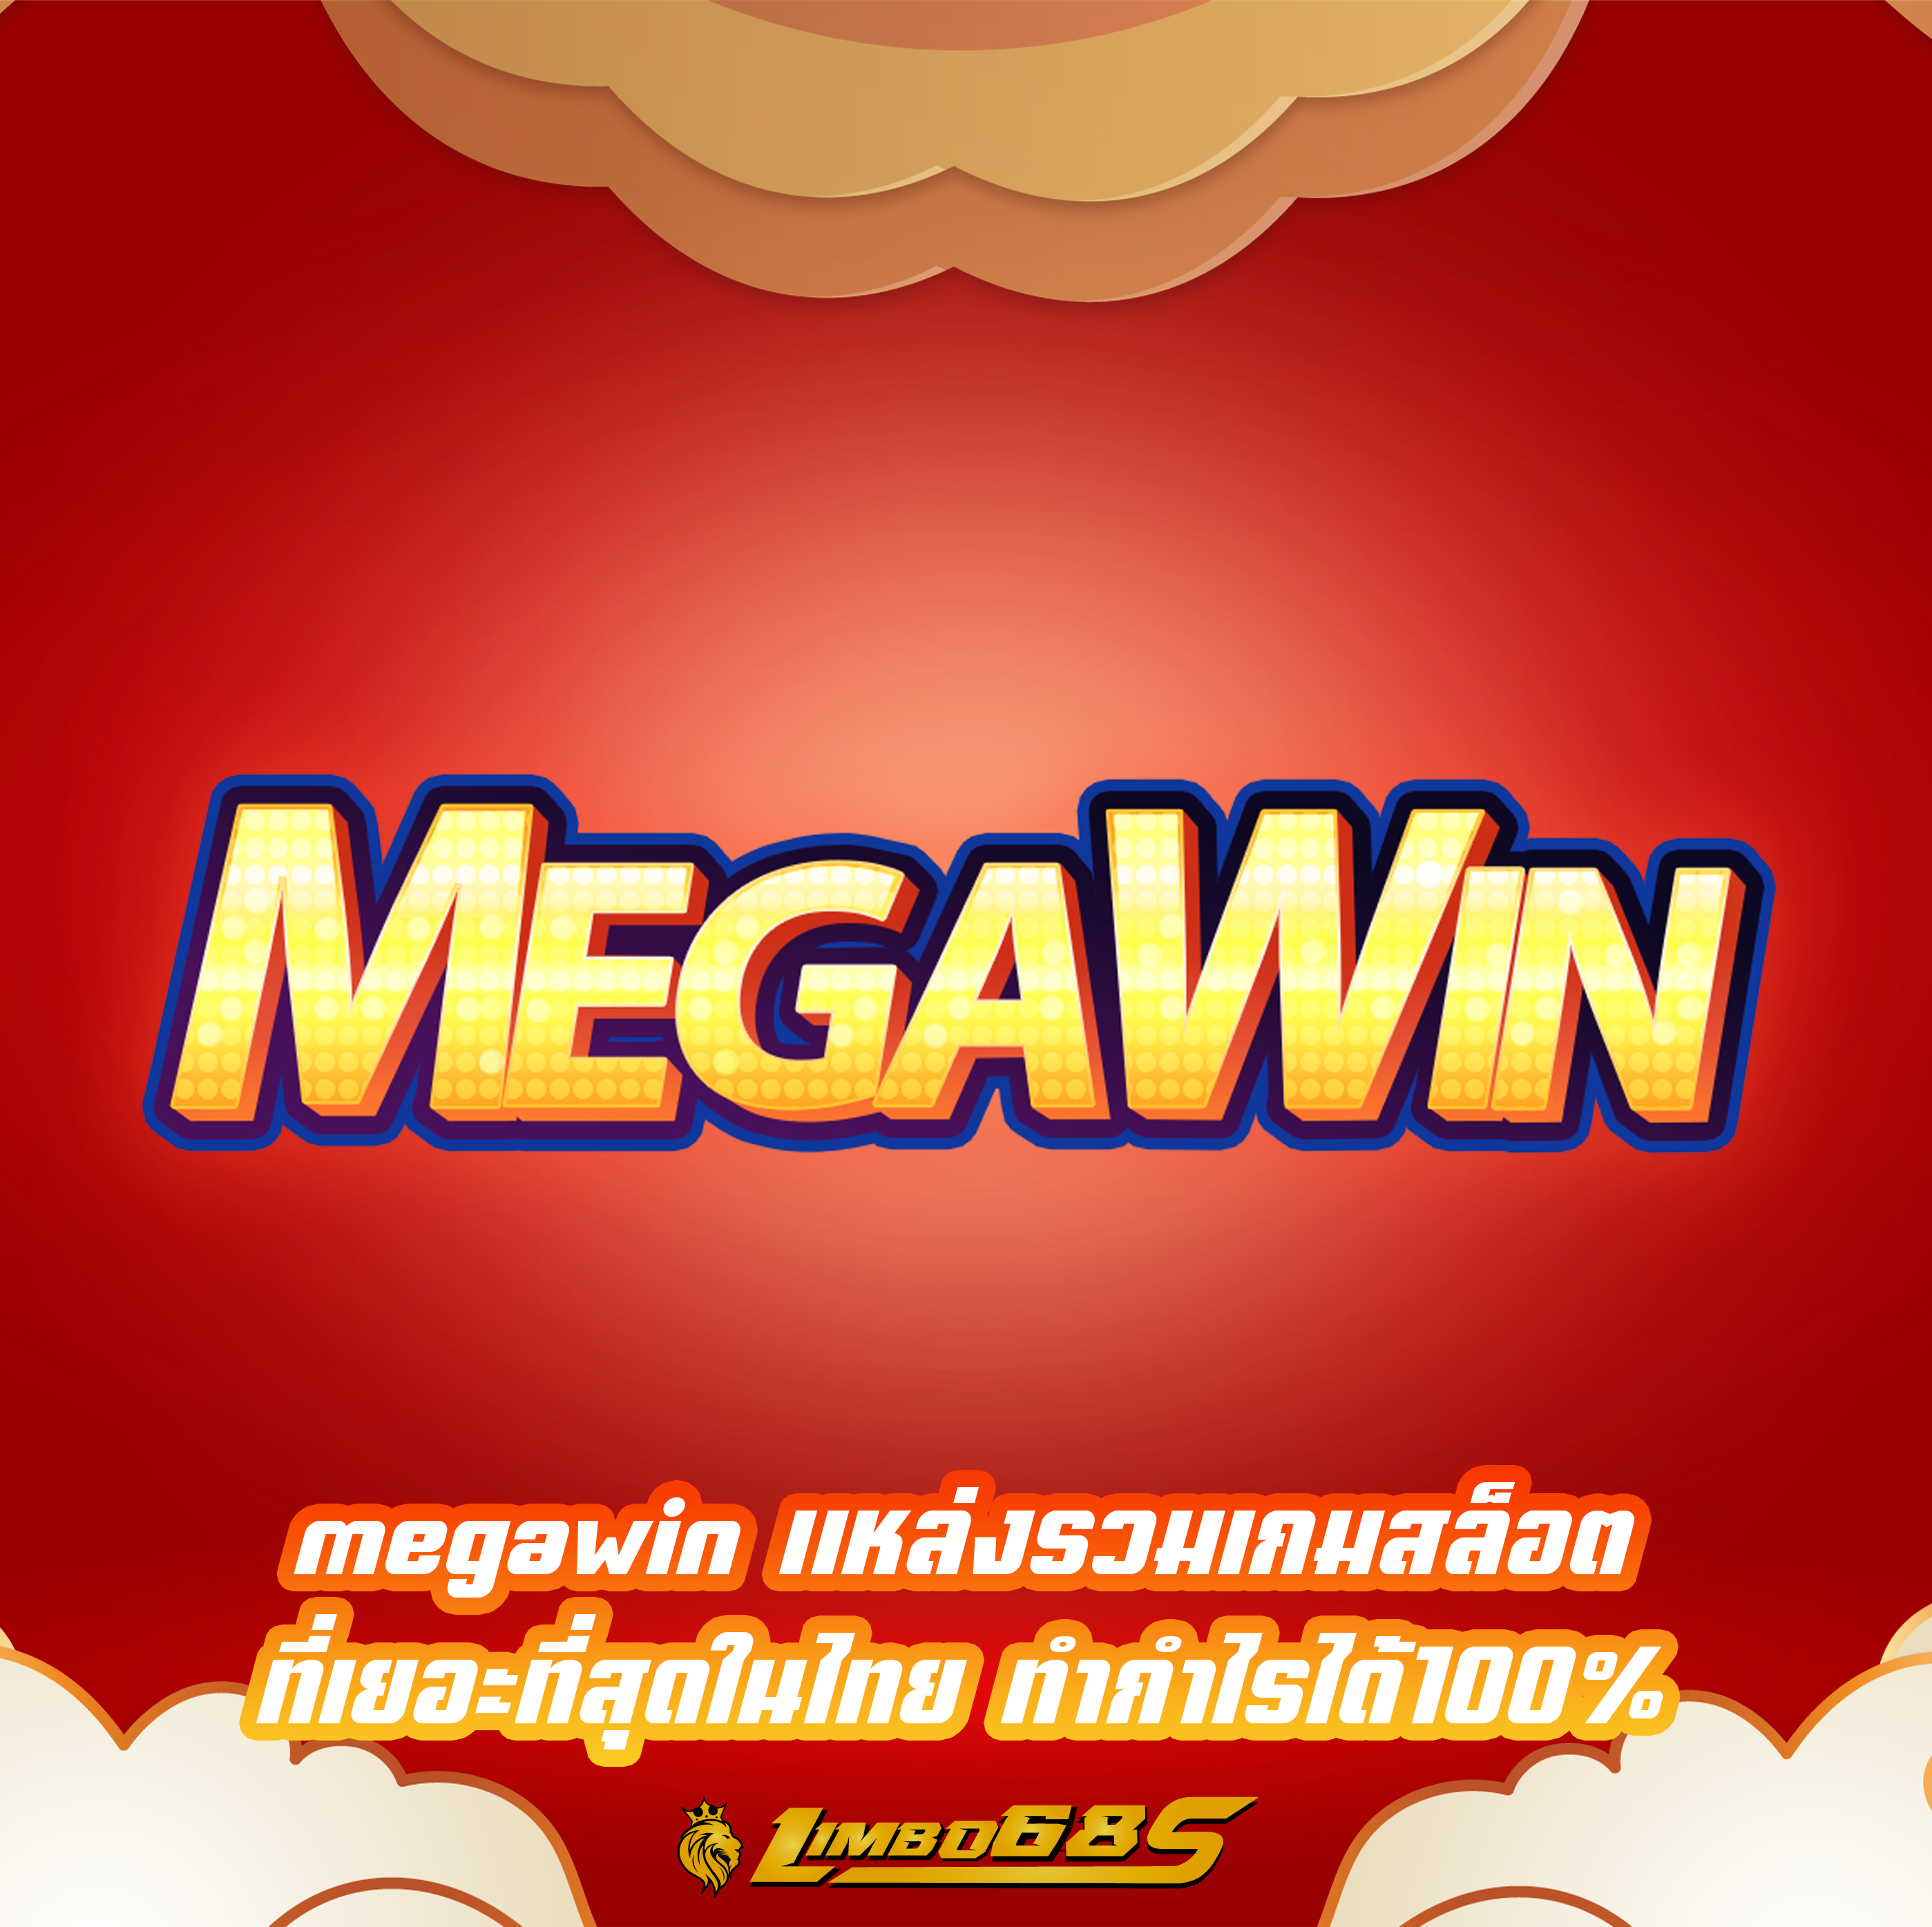 megawin แหล่งรวมเกมสล็อต ที่เยอะที่สุดในไทย ทำกำไรได้100%